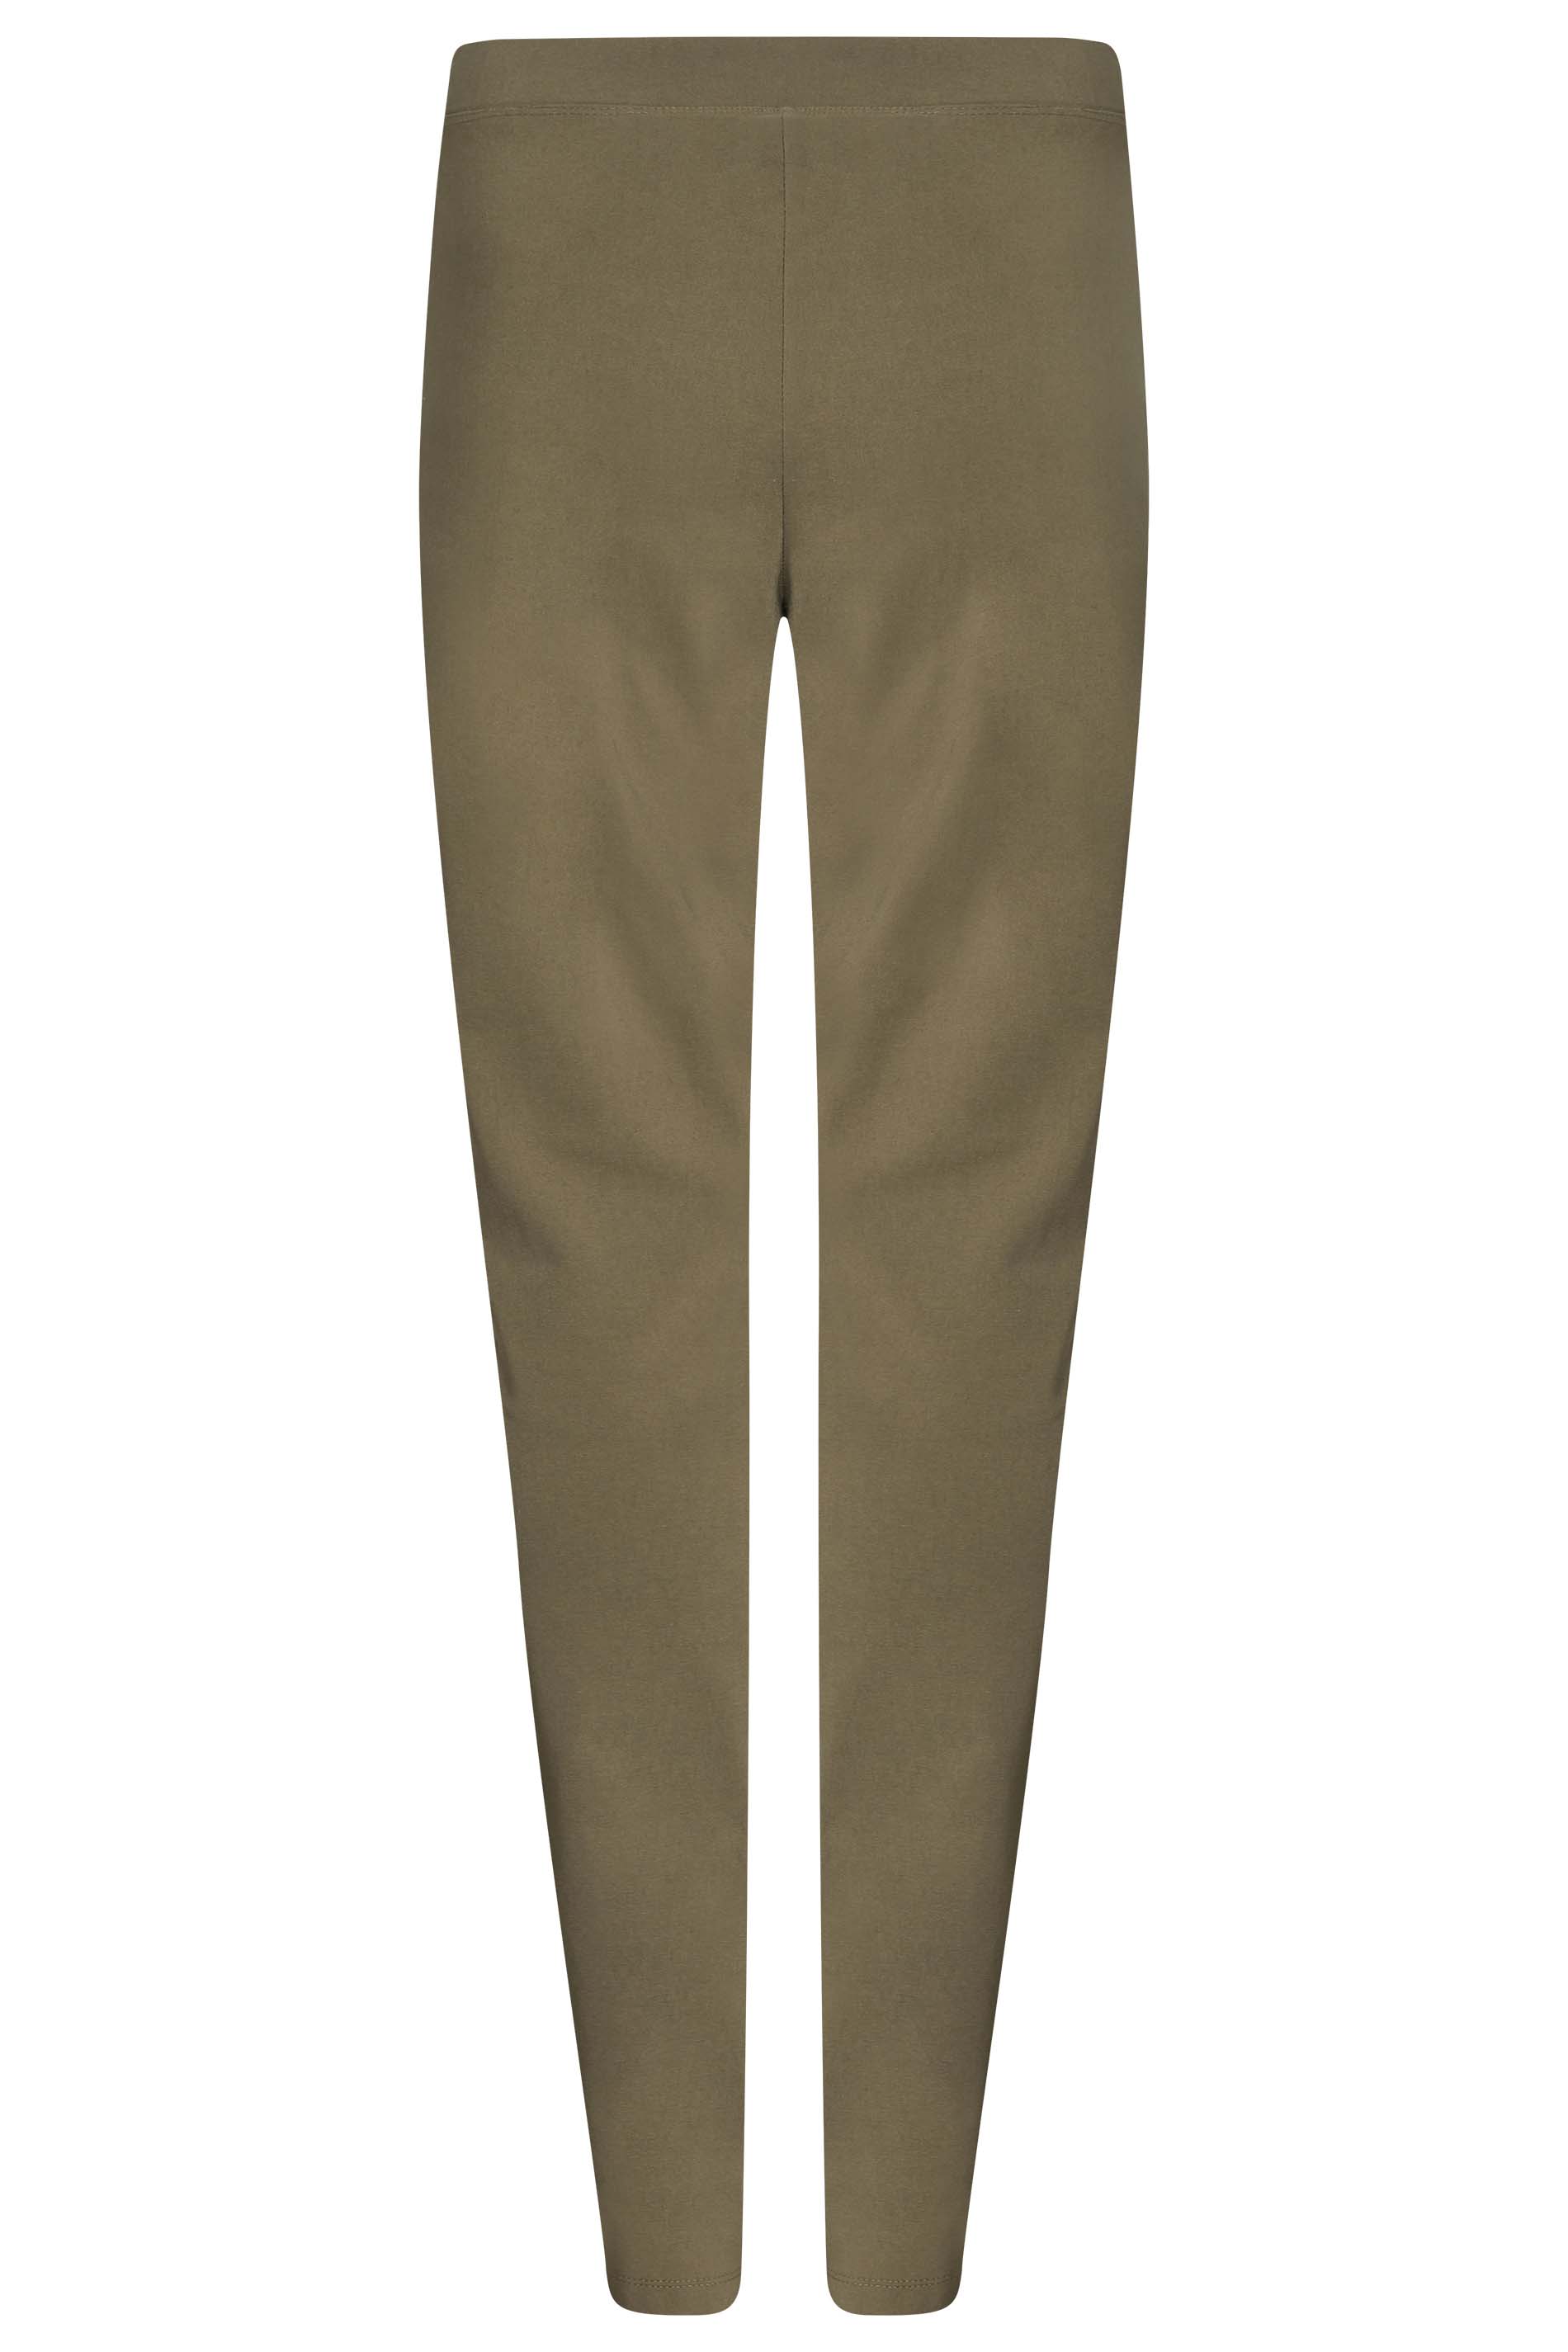 LTS Tall Khaki Green Stretch Skinny Trousers | Long Tall Sally 3